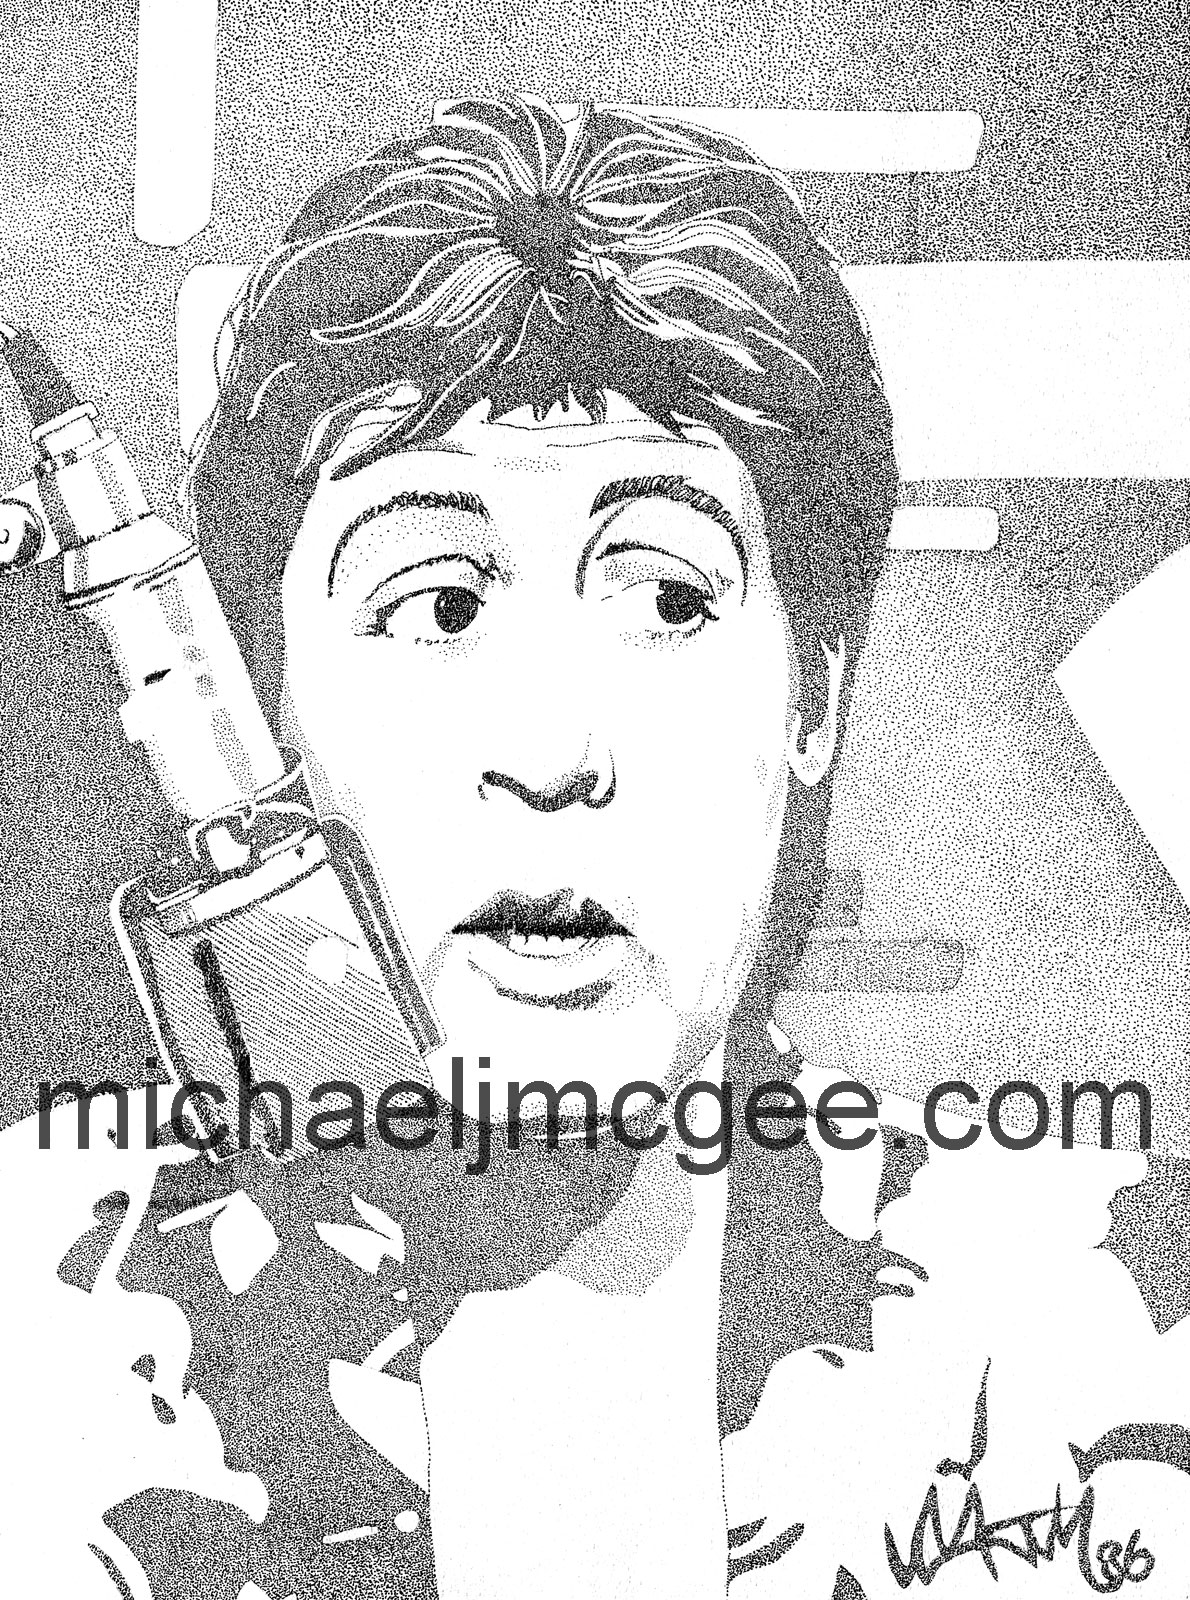 Sir Paul McCartney / MJM Artworks / michaeljmcgee.com